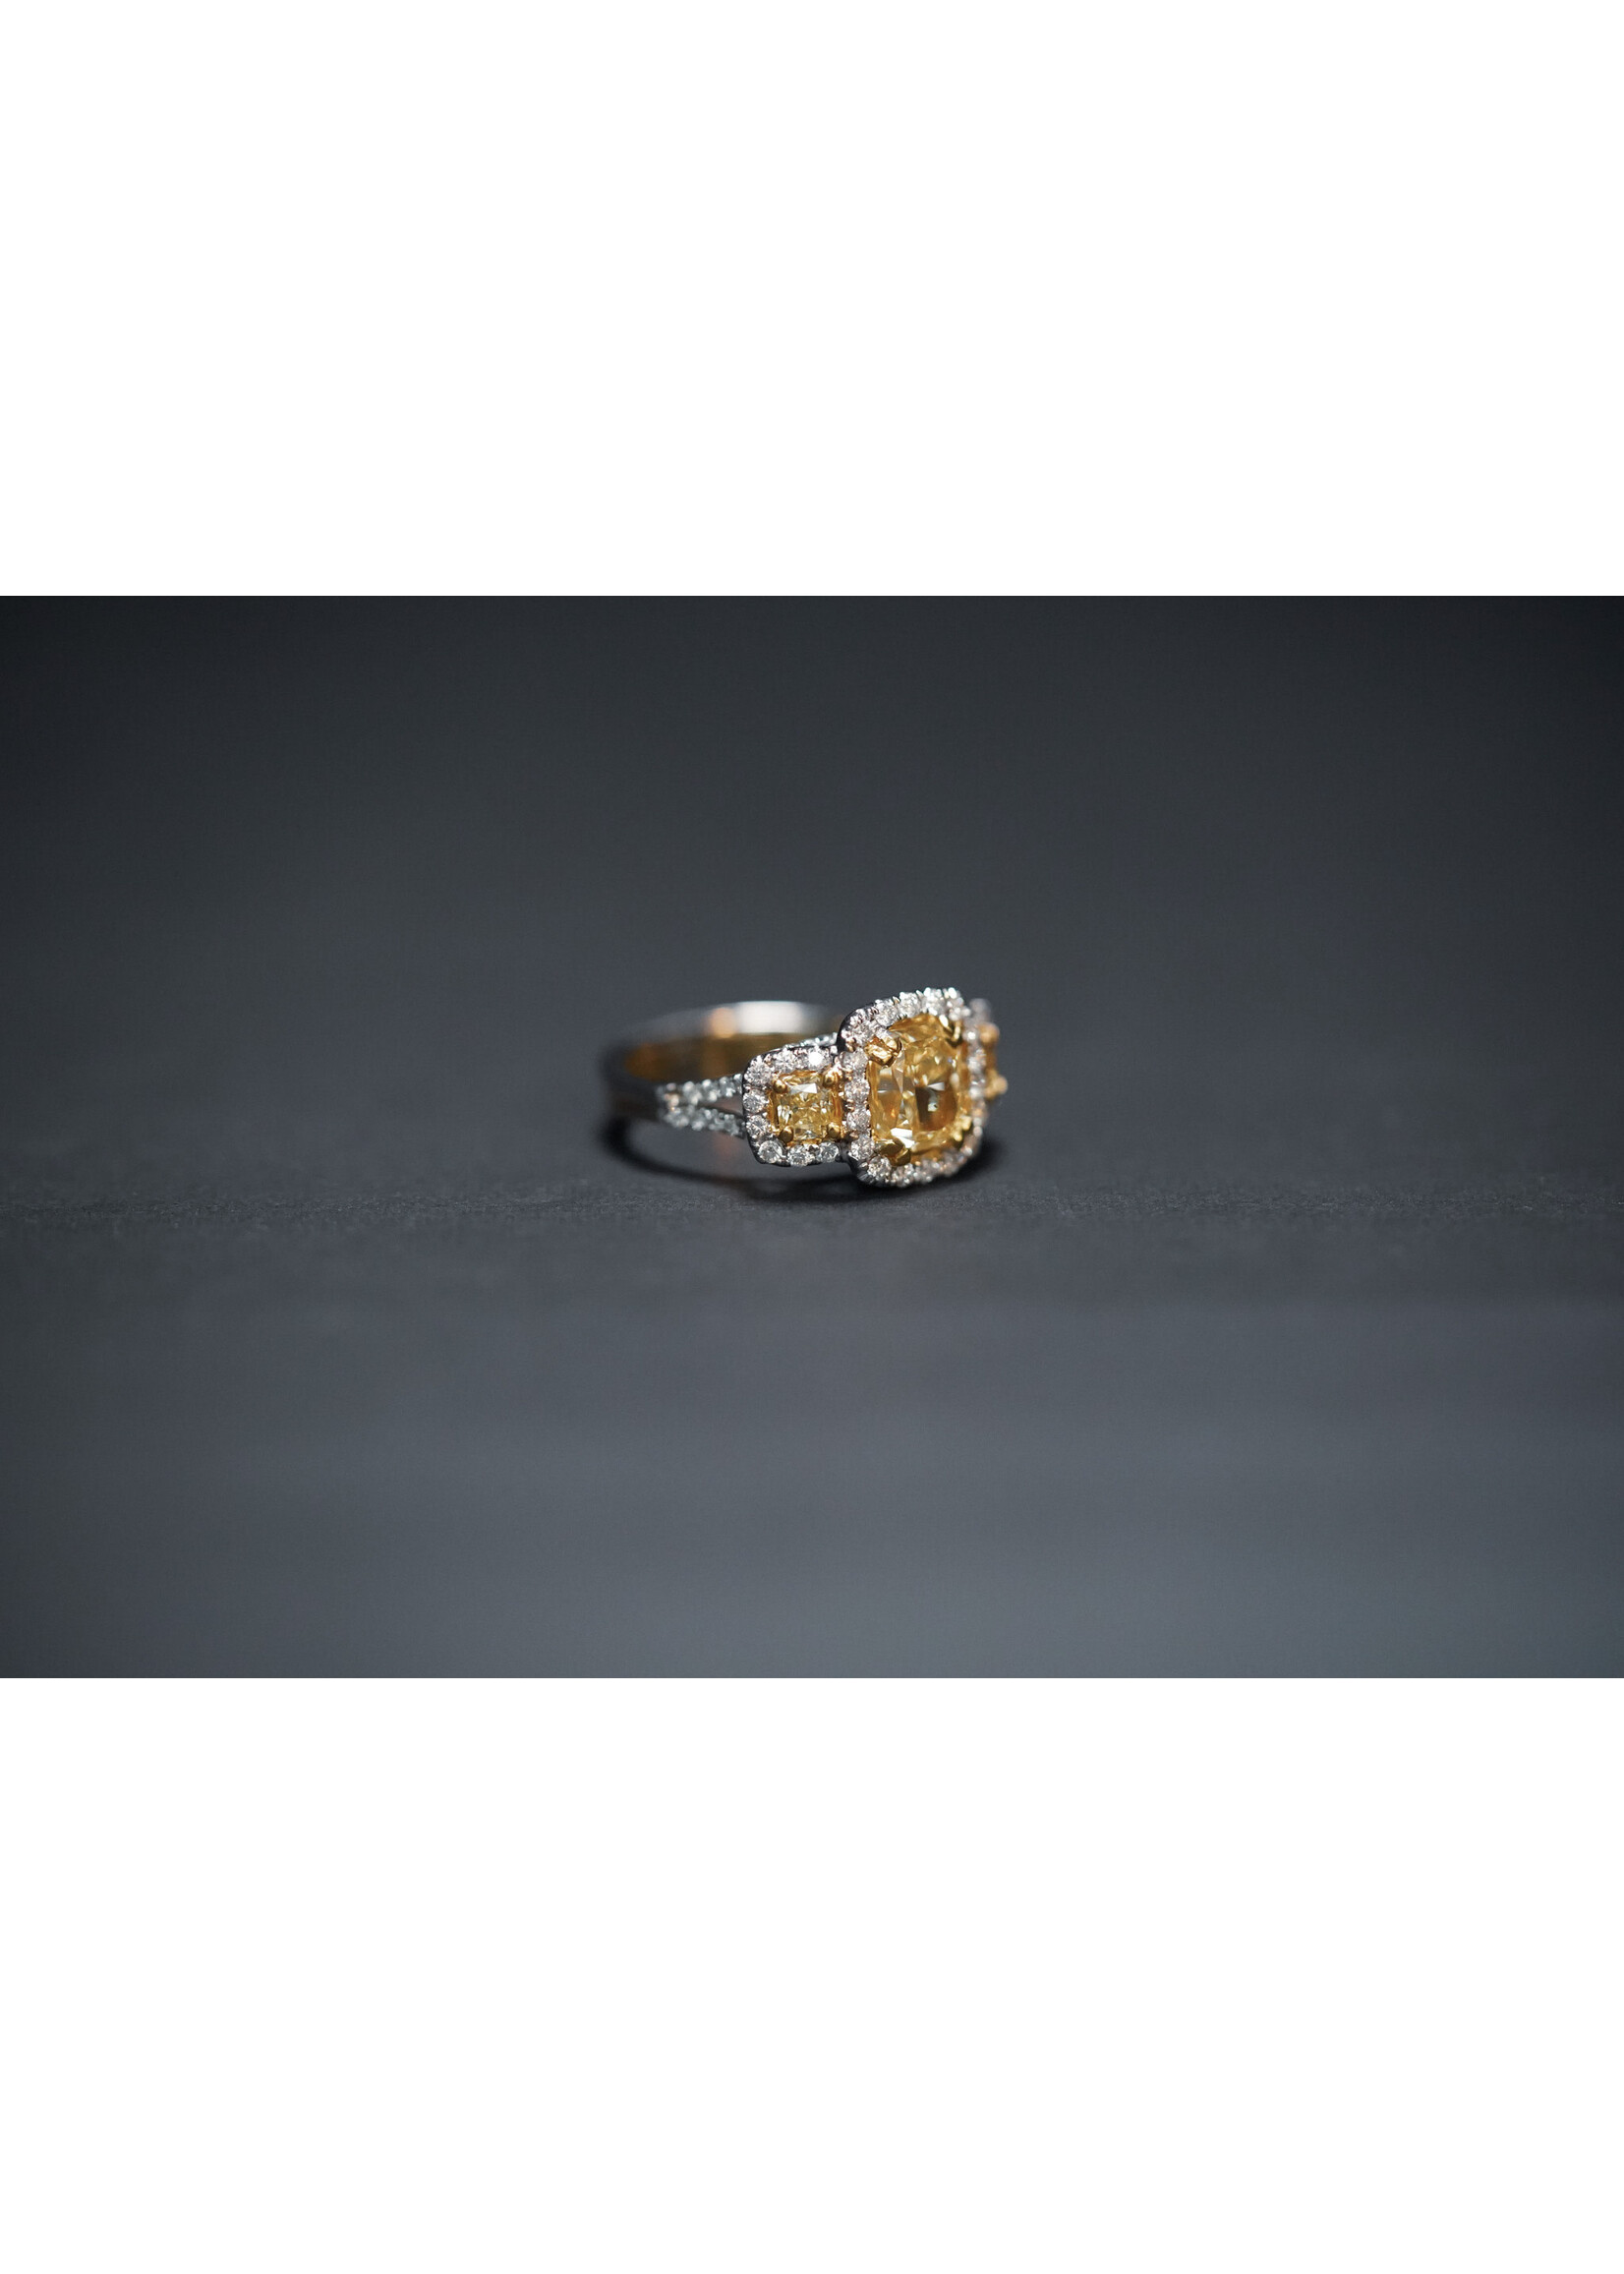 18KWY 6.67g 3.23ctw (2.03ctr) FLY/SI2 Cushion Diamond Three Stone Halo Engagement Ring (size 7.25)